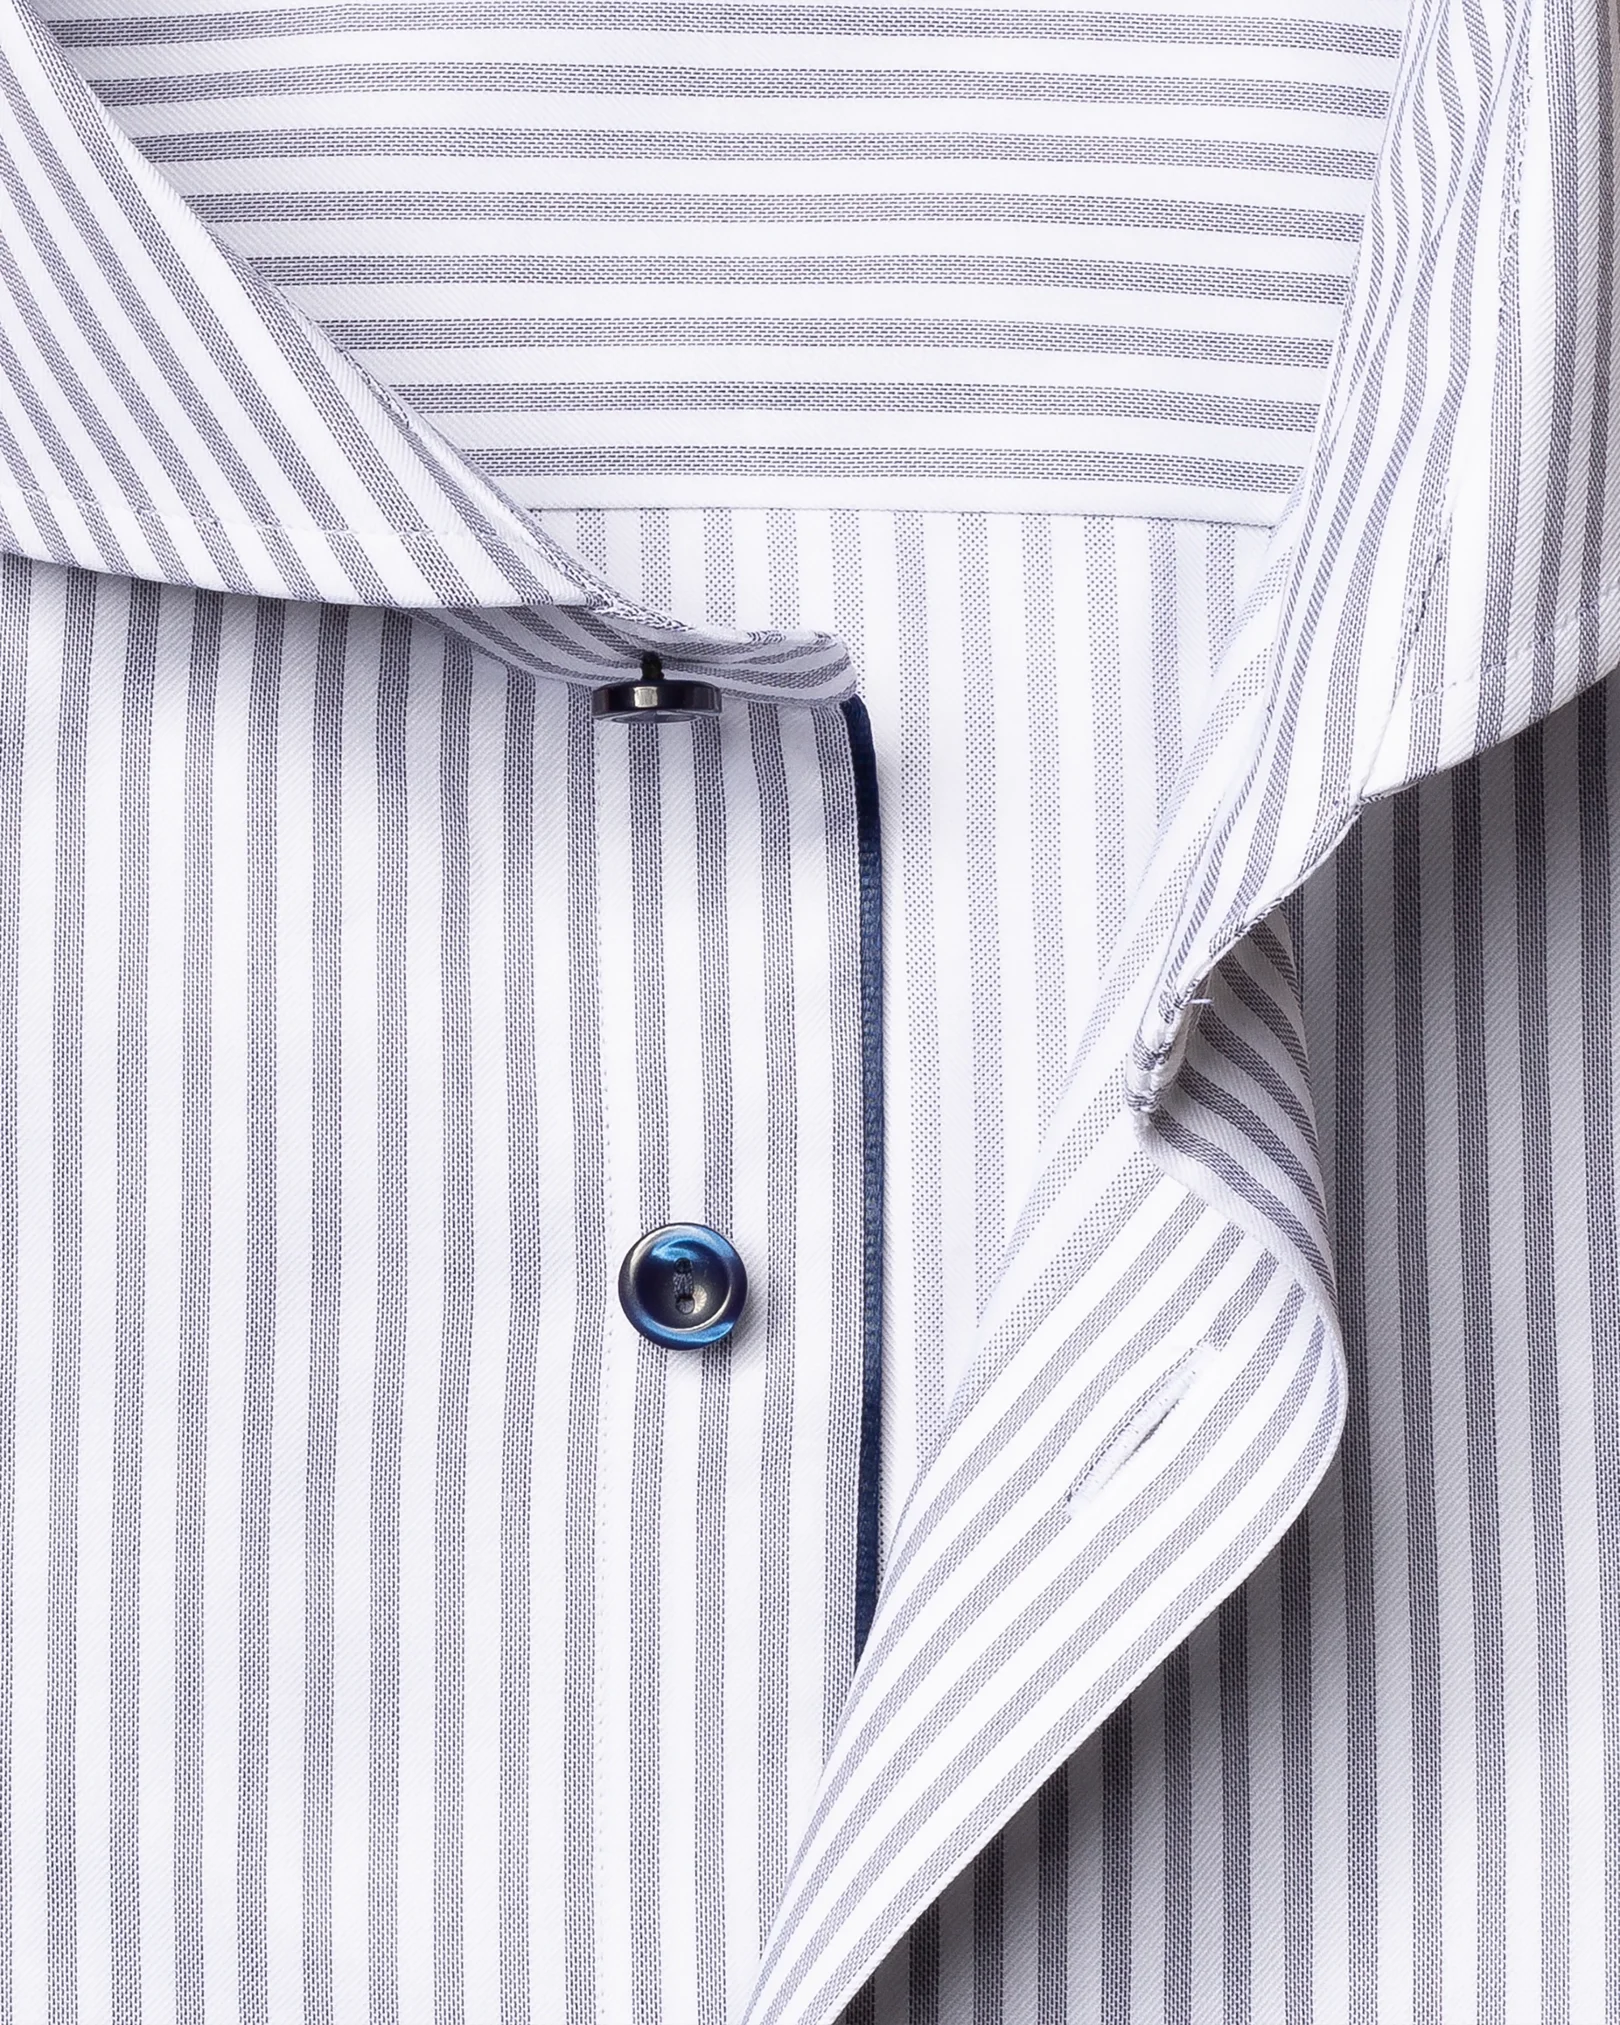 Eton - dark blue striped signature twill shirt extreme cut away